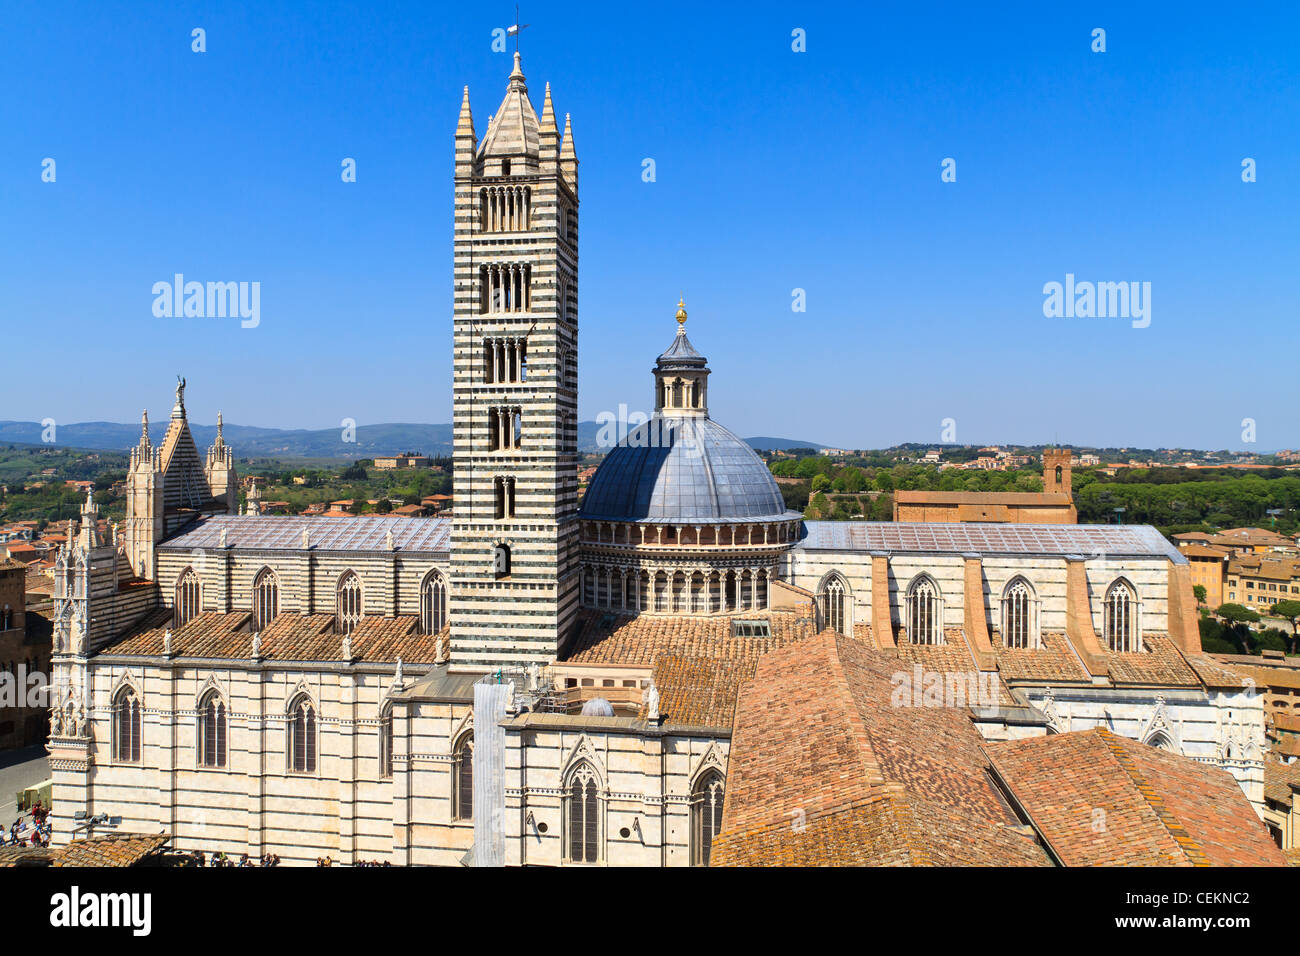 Sienne dome / cathédrale (Duomo), Italie Banque D'Images